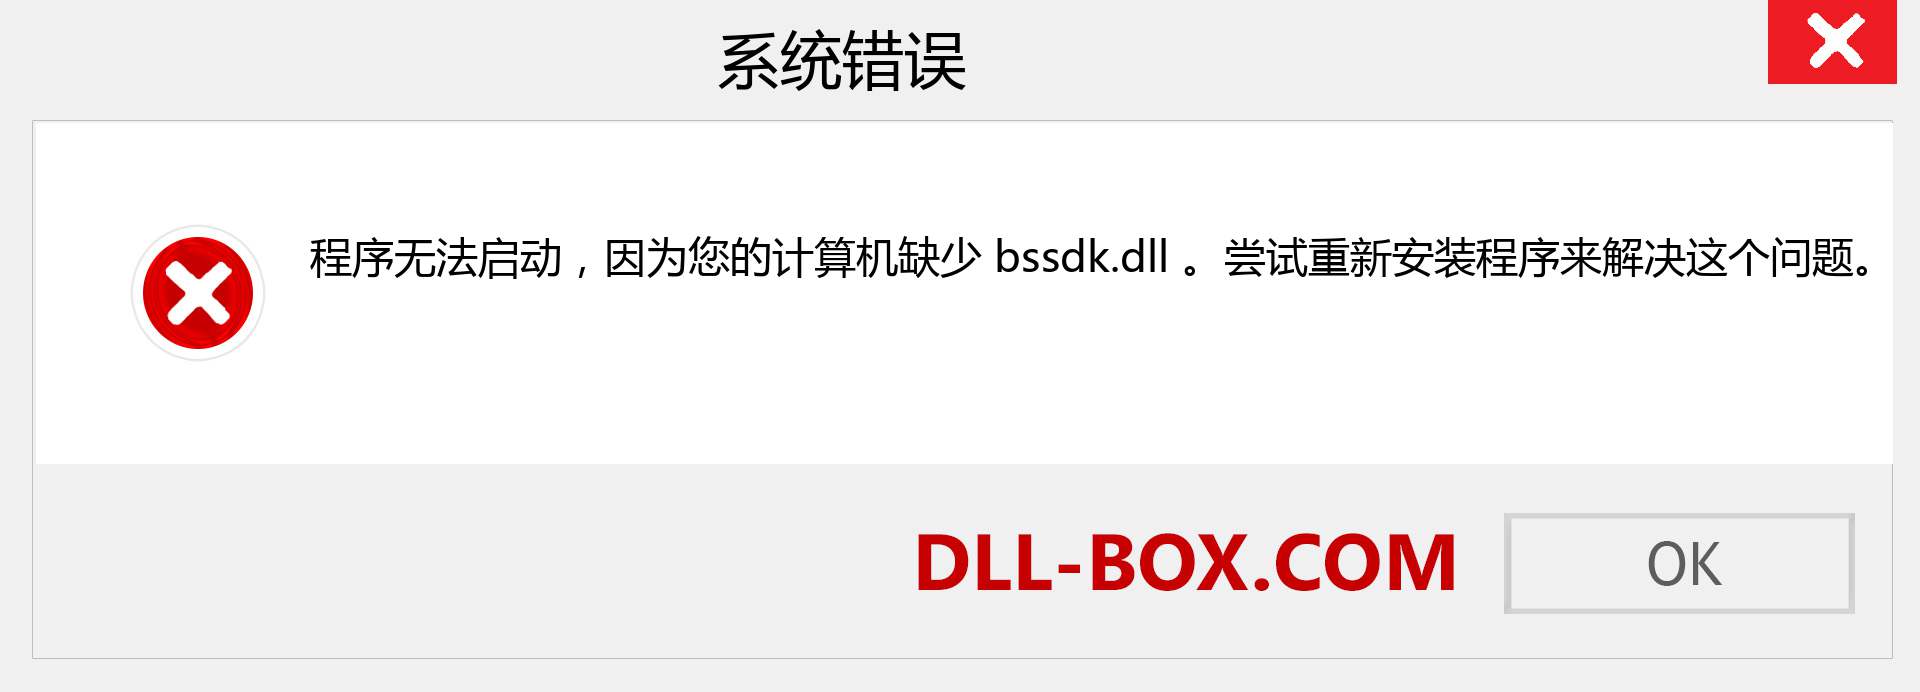 bssdk.dll 文件丢失？。 适用于 Windows 7、8、10 的下载 - 修复 Windows、照片、图像上的 bssdk dll 丢失错误